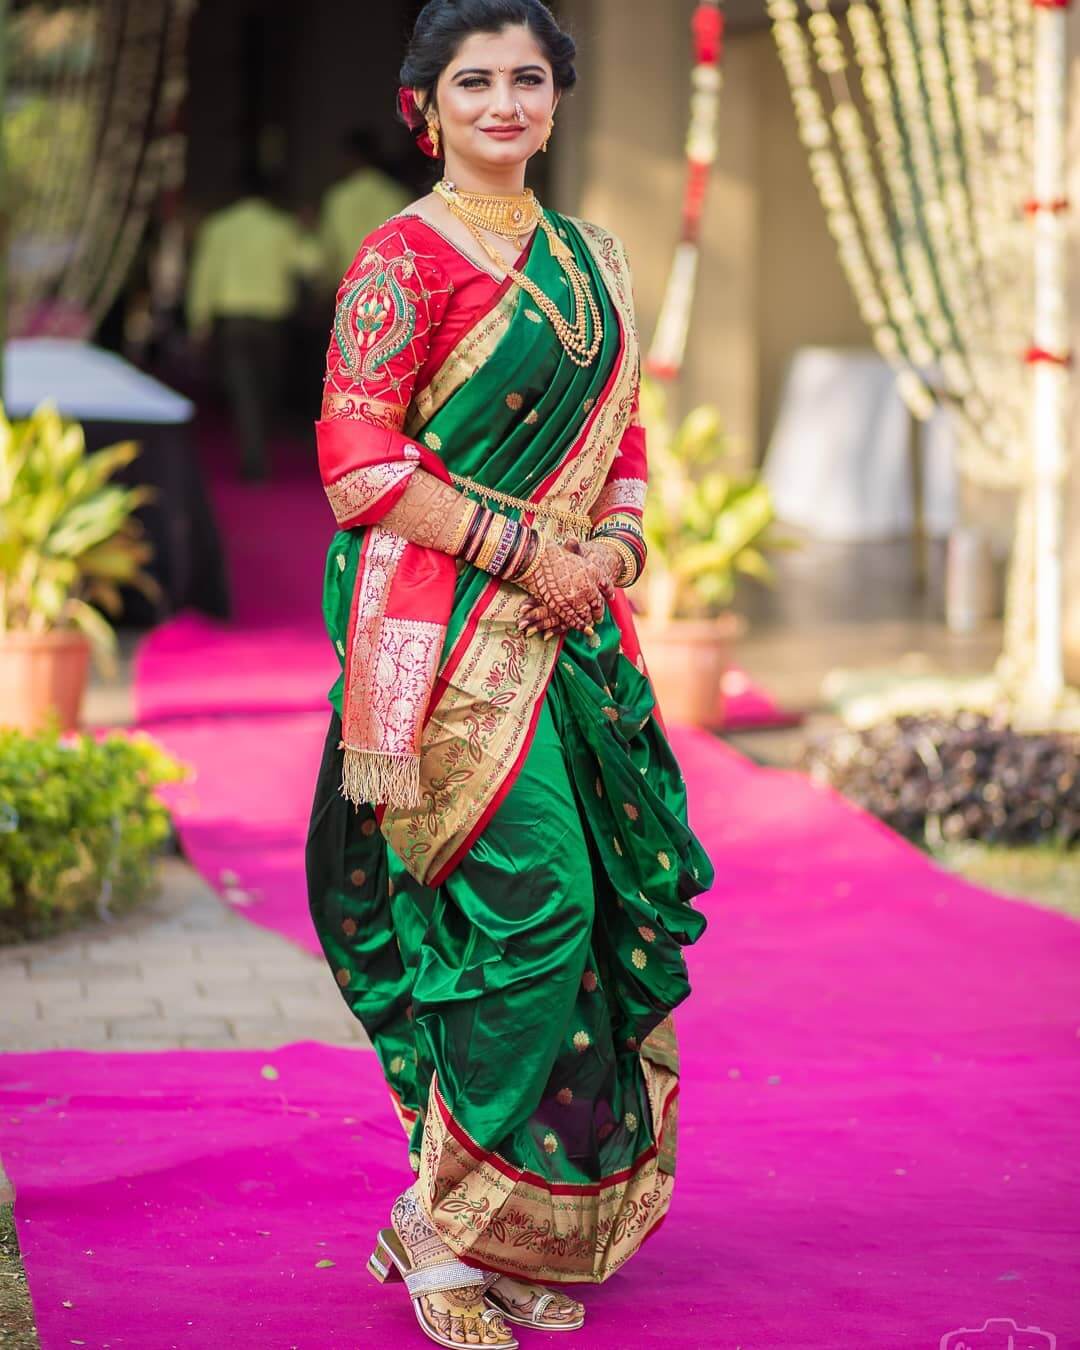 Top Maharashtrian Bridal Looks Worth Taking Inspirations From!